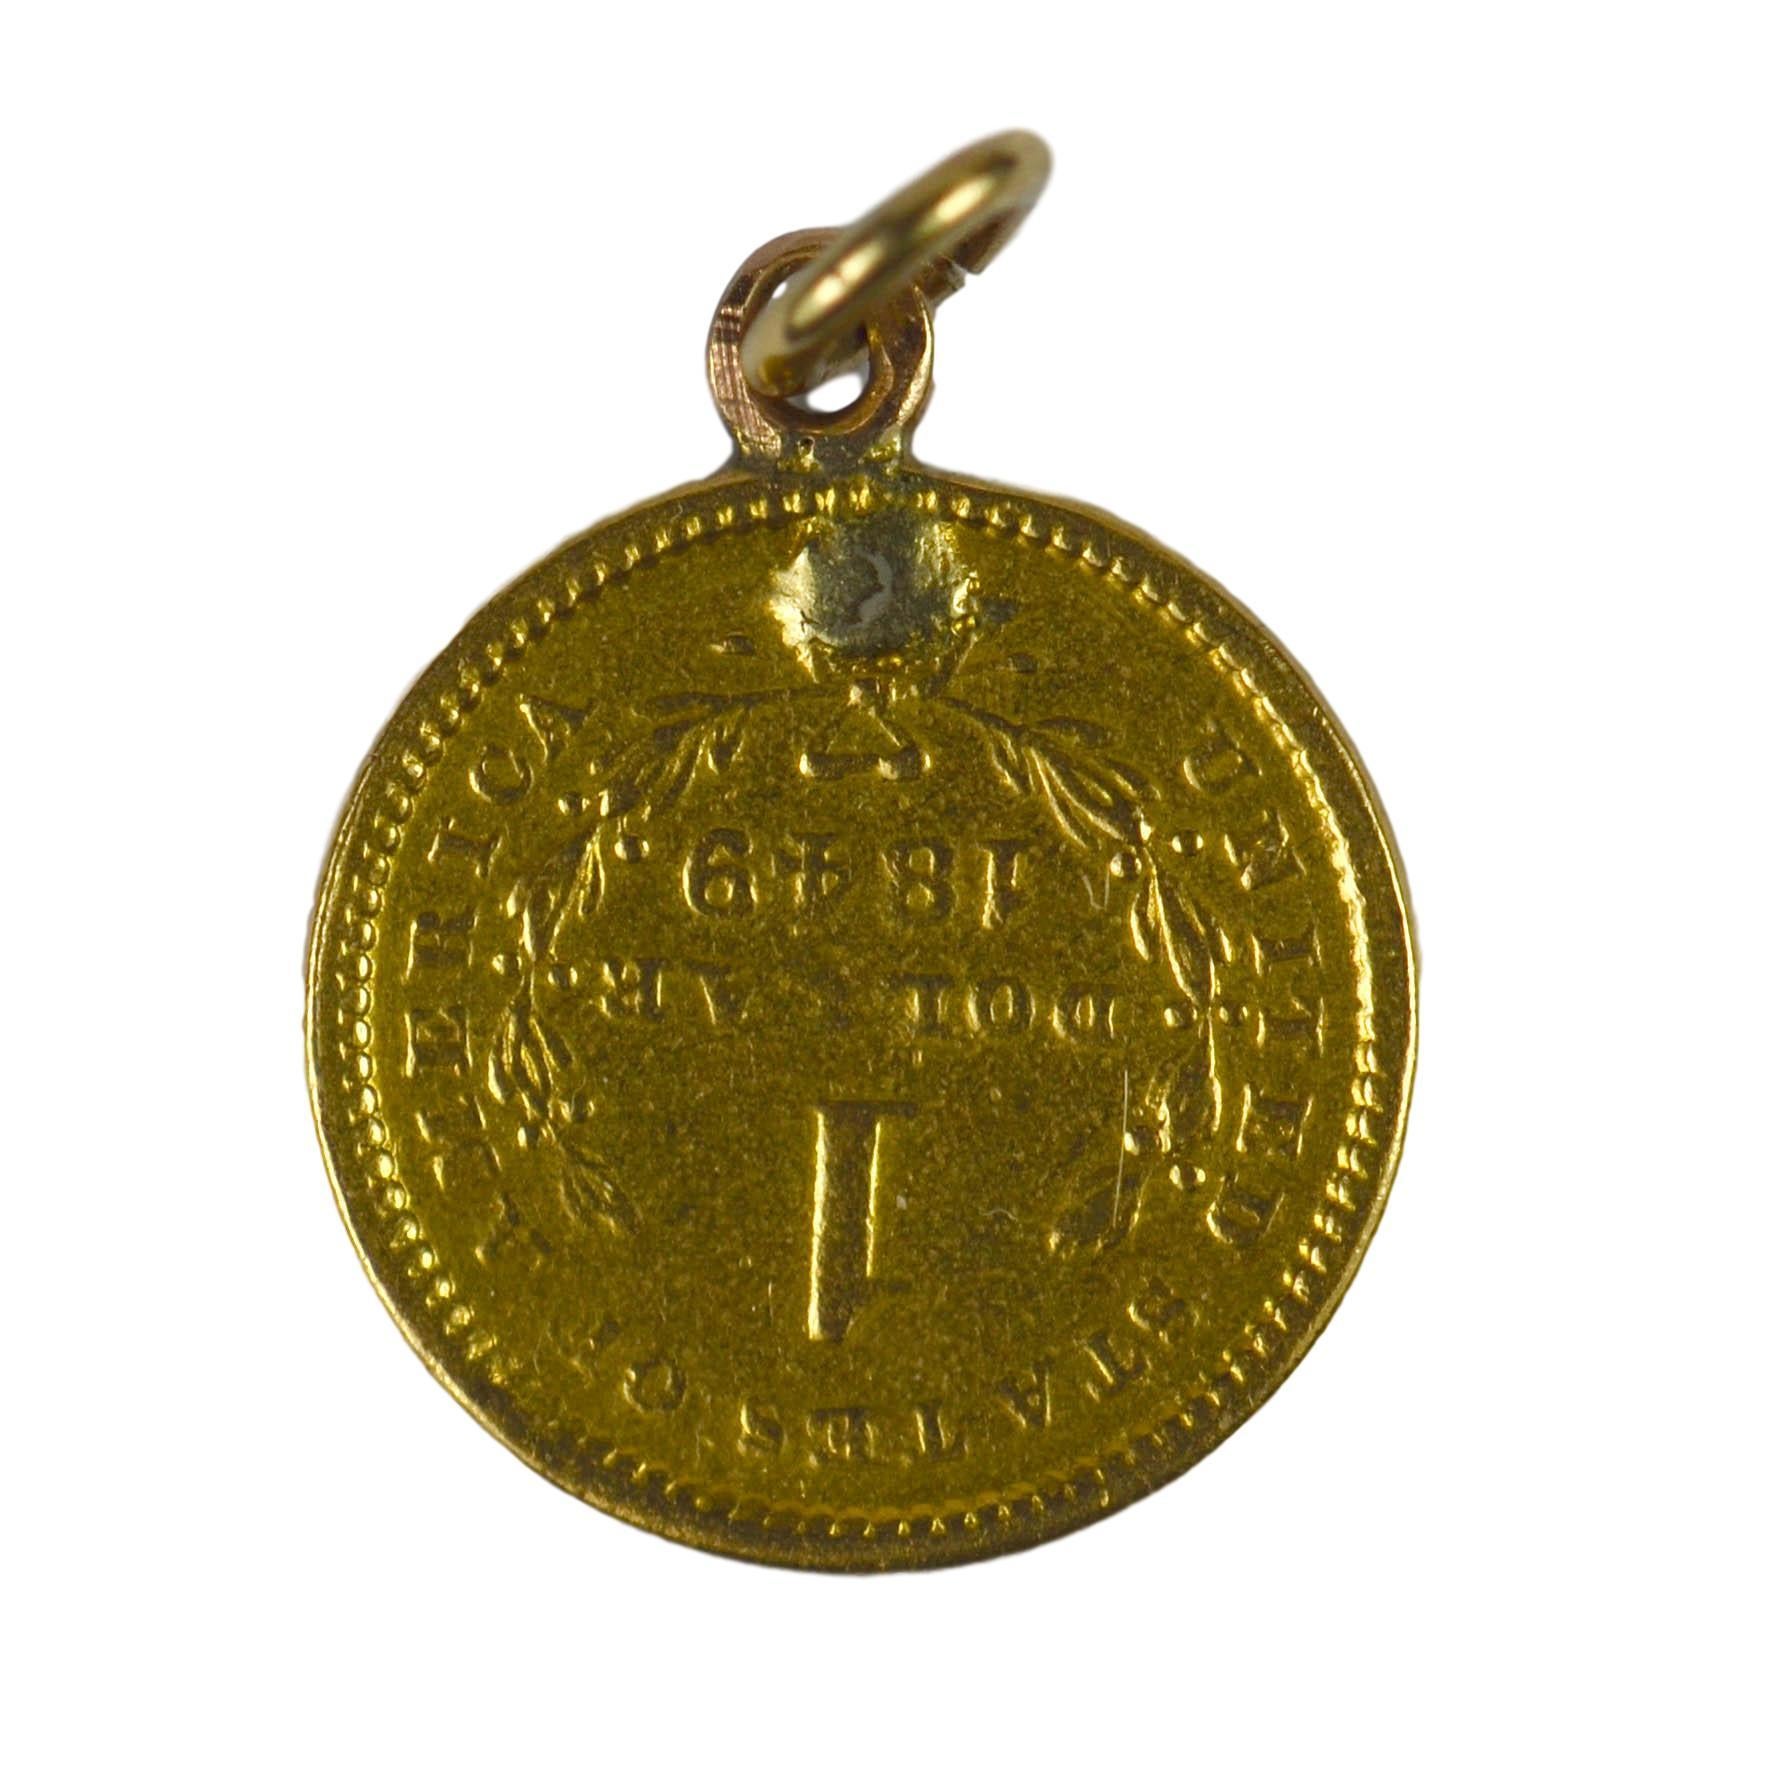 1849 gold coin